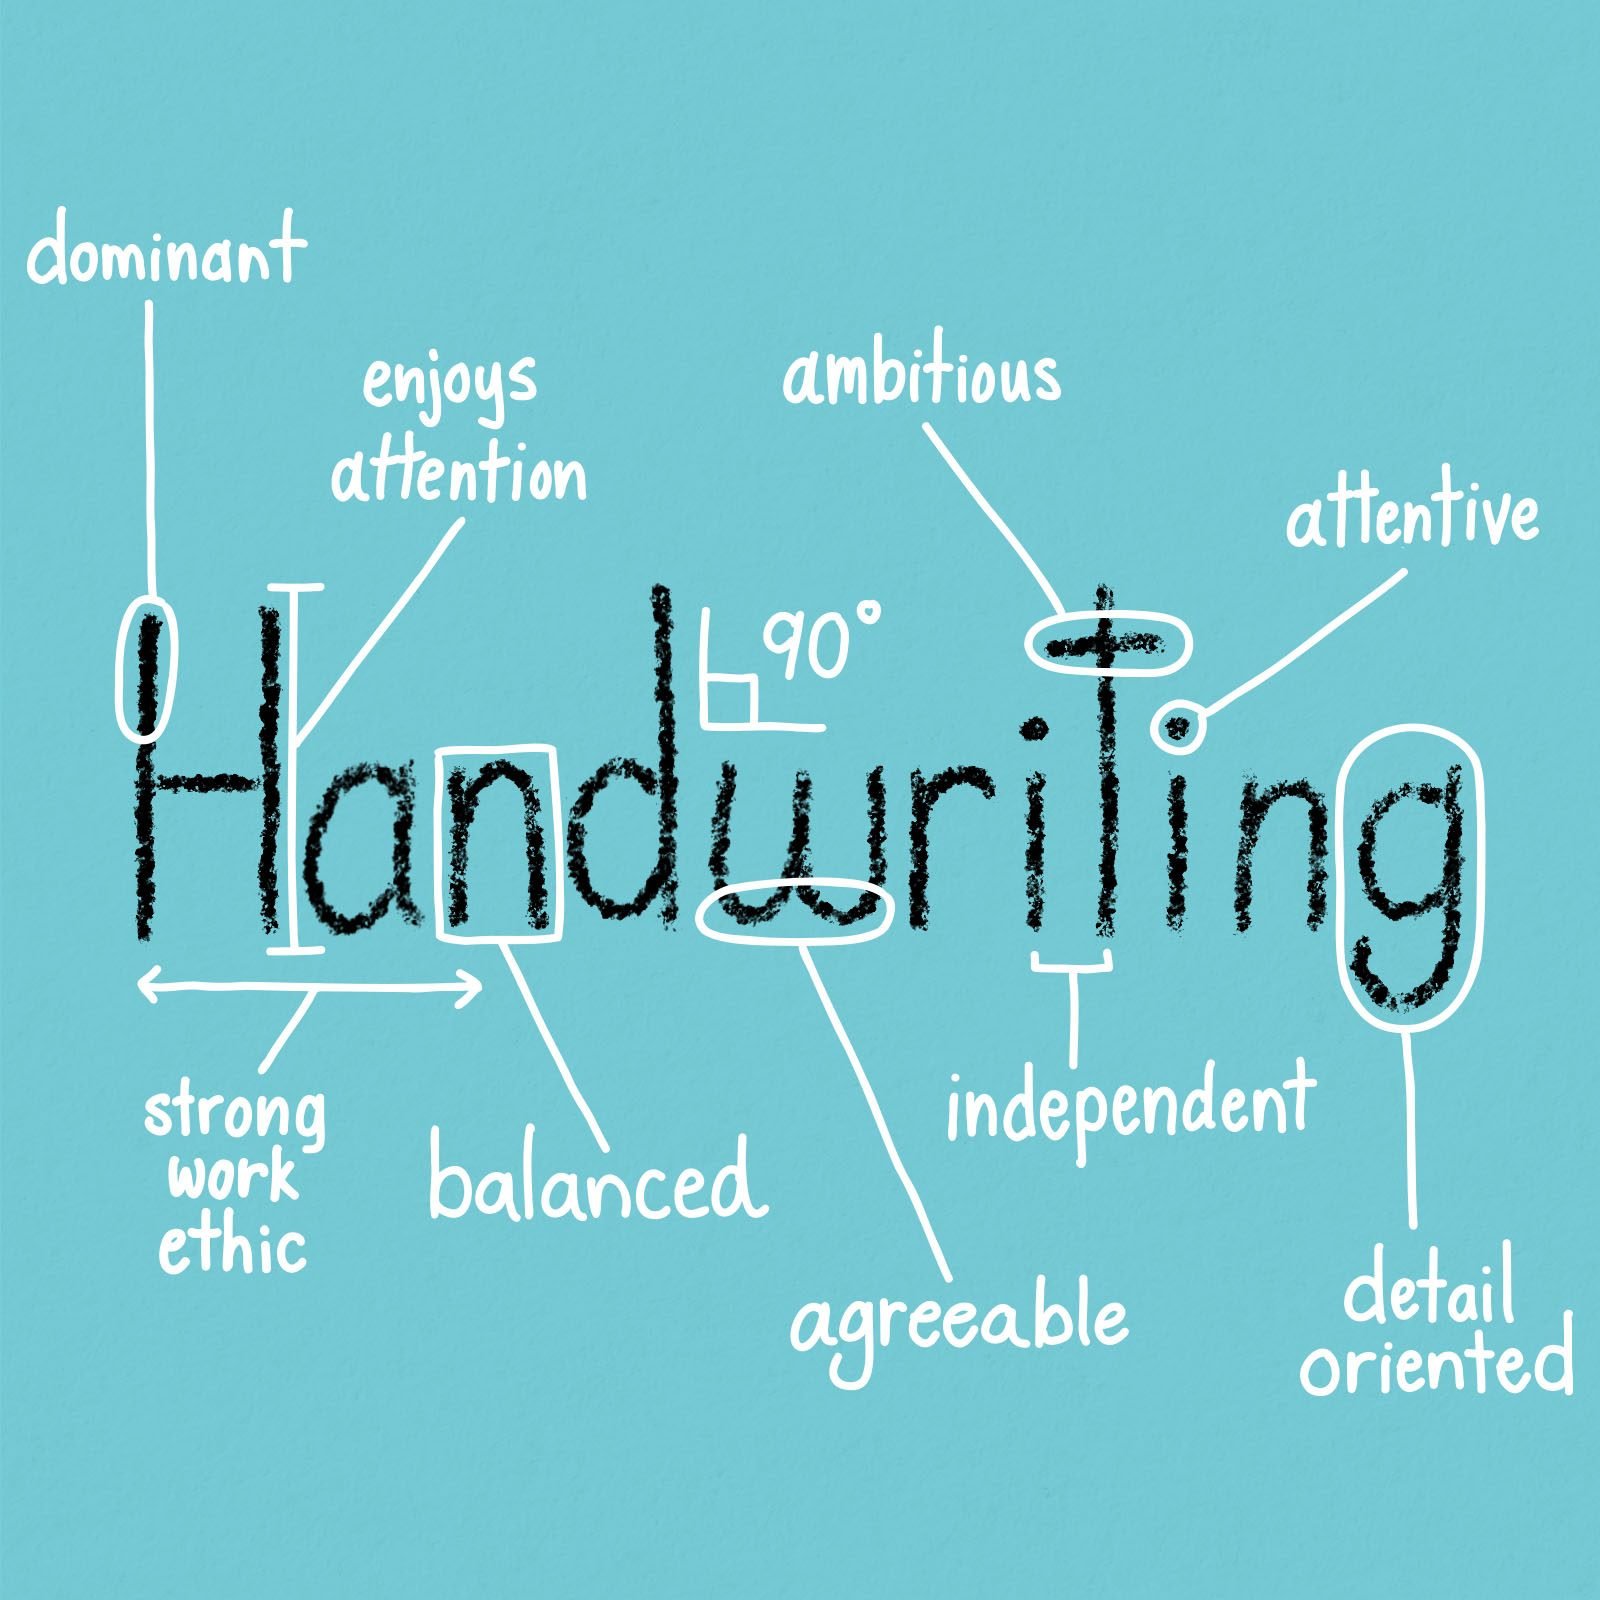 Handwriting, Definition, Styles, & Analysis